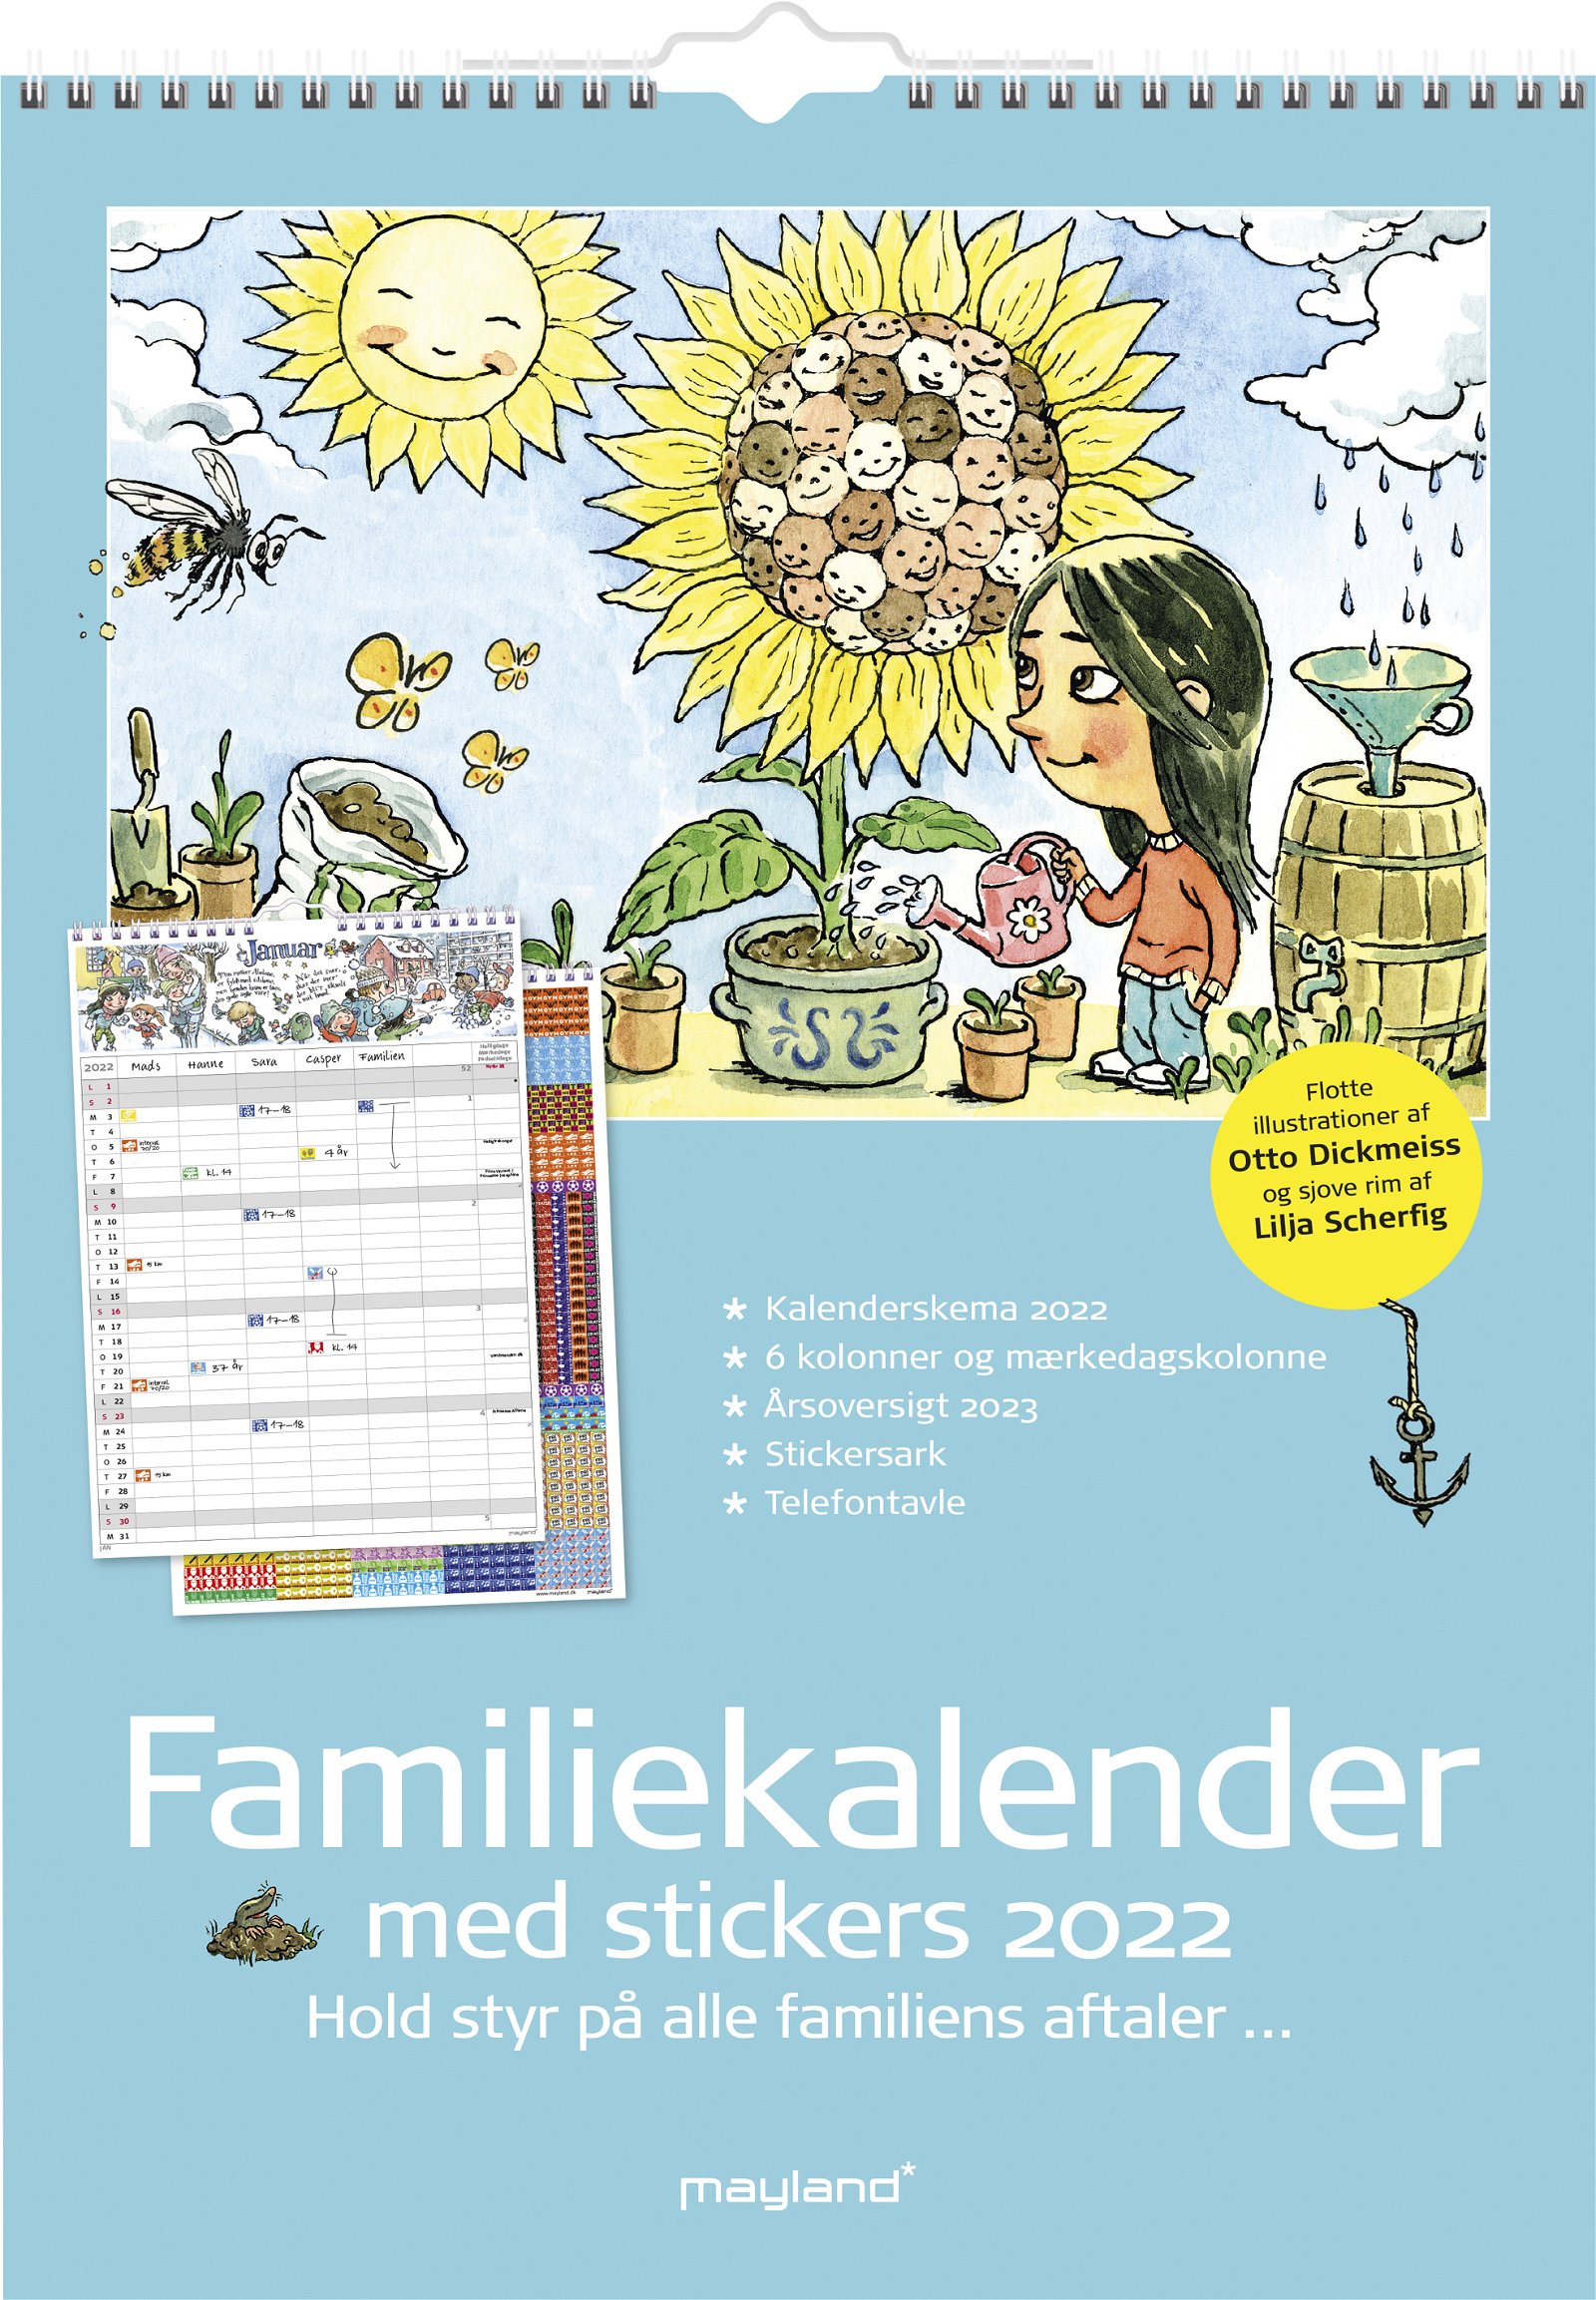 Mayland Familiekalender med stickers 2022